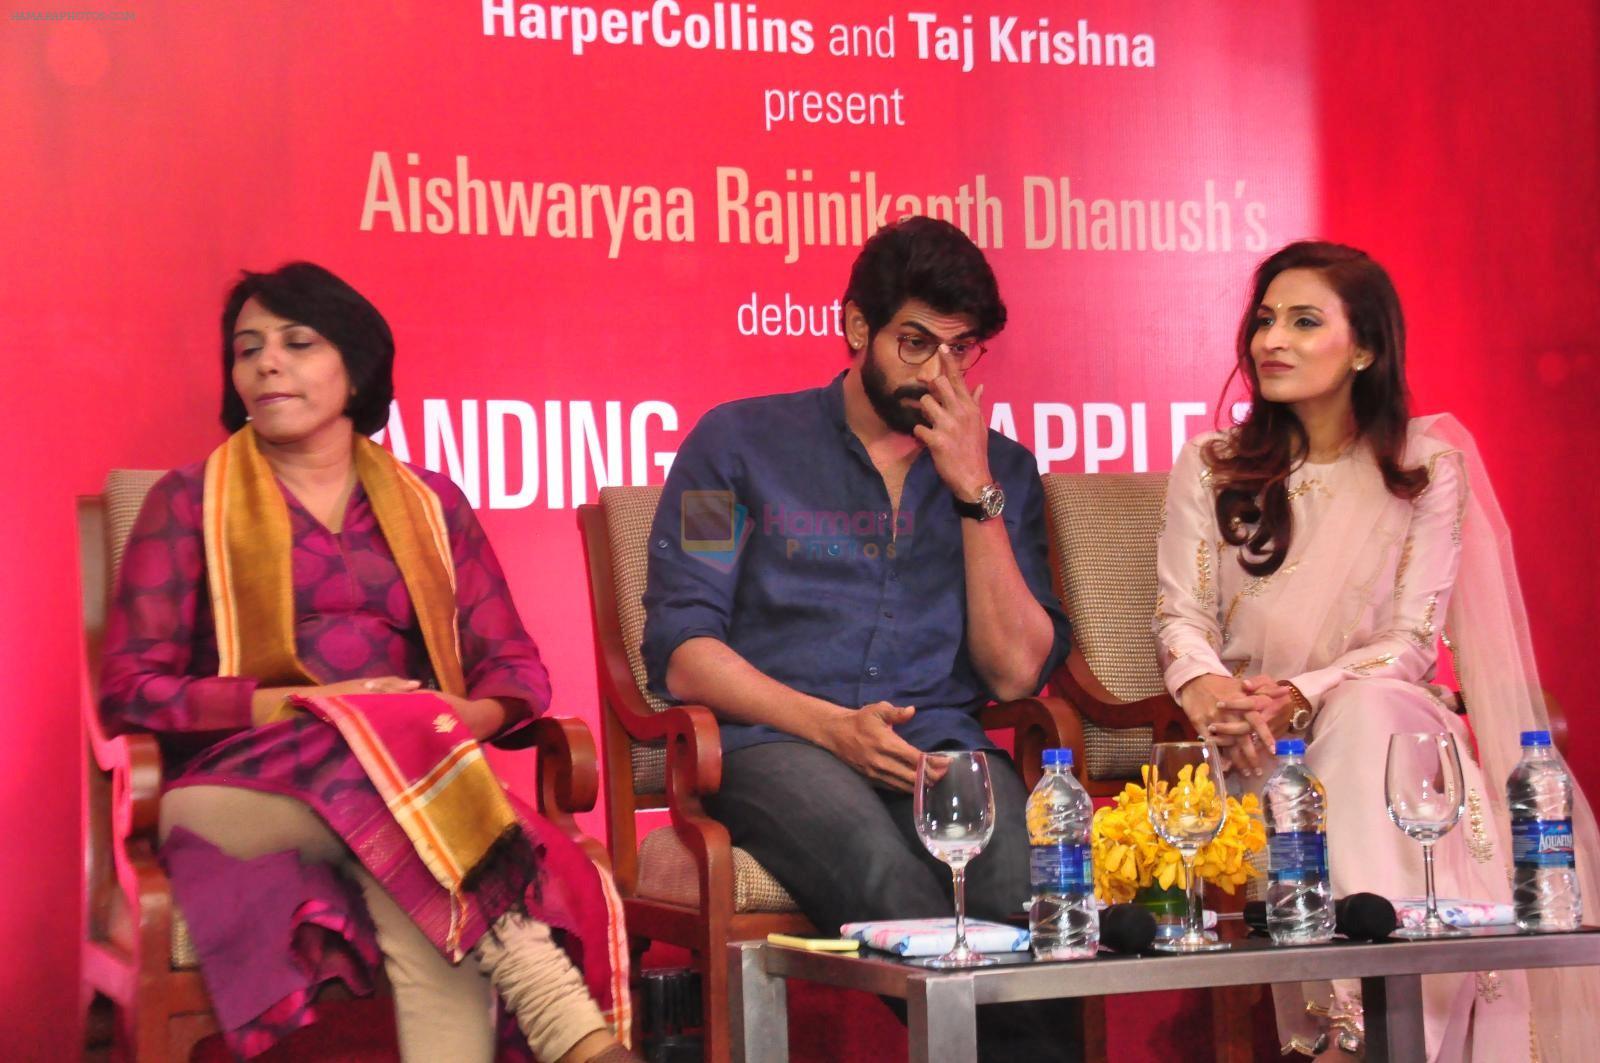 Rana Daggubati at the launch of Aishwarya R. Dhanush's book Standing On an apple box on 20th Dec 2016